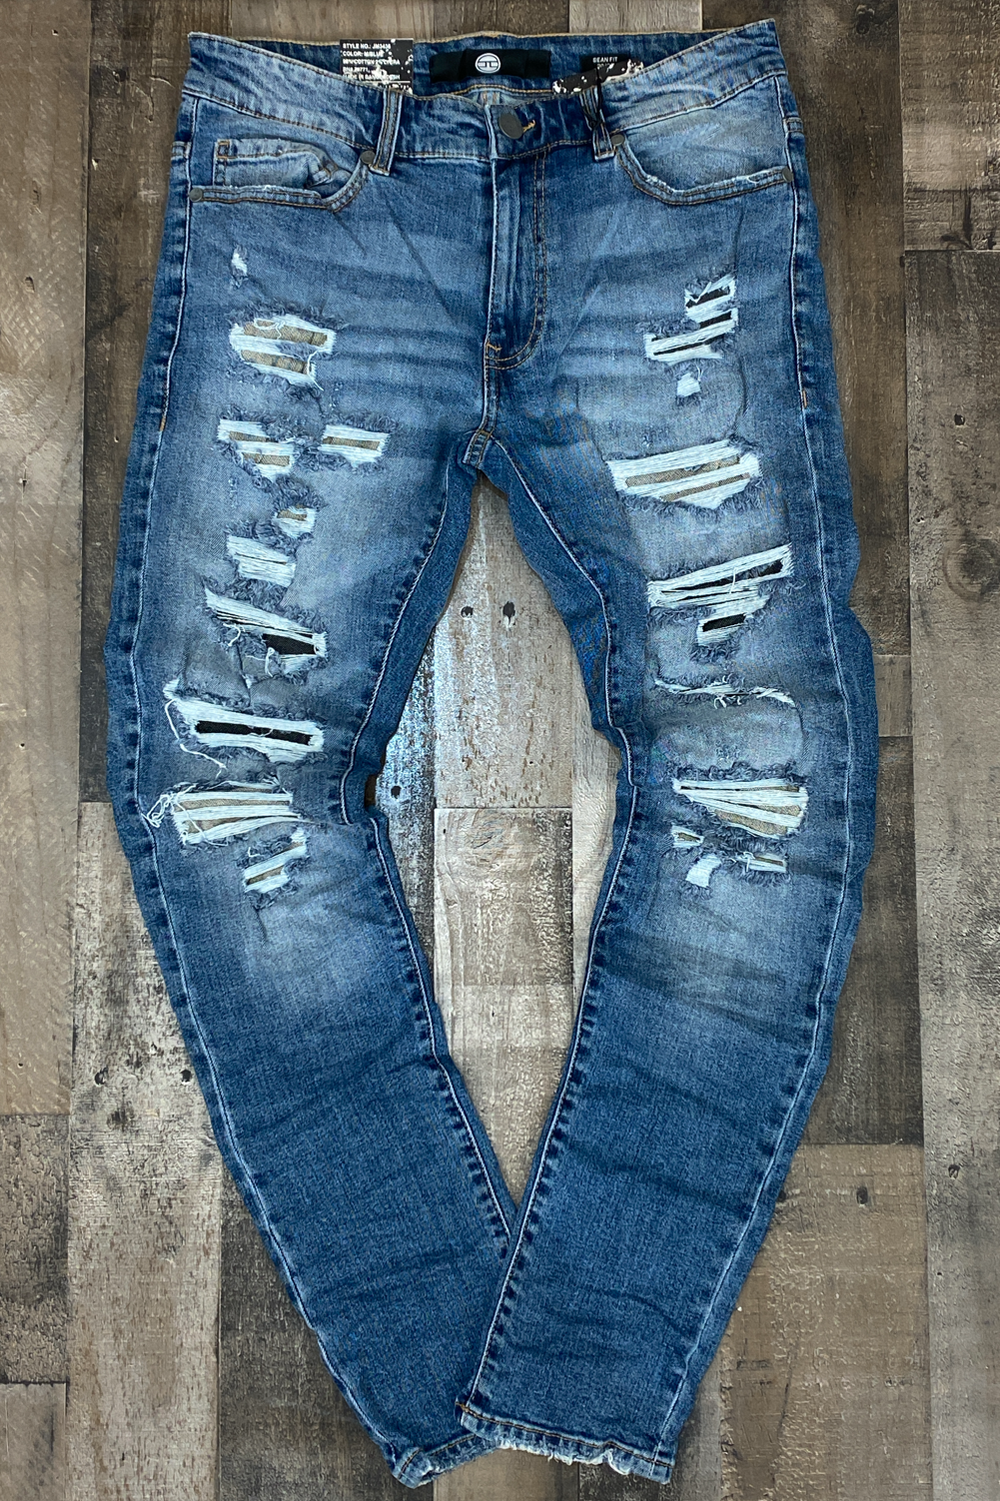 Jordan Craig- crinkled denim jeans w shreds